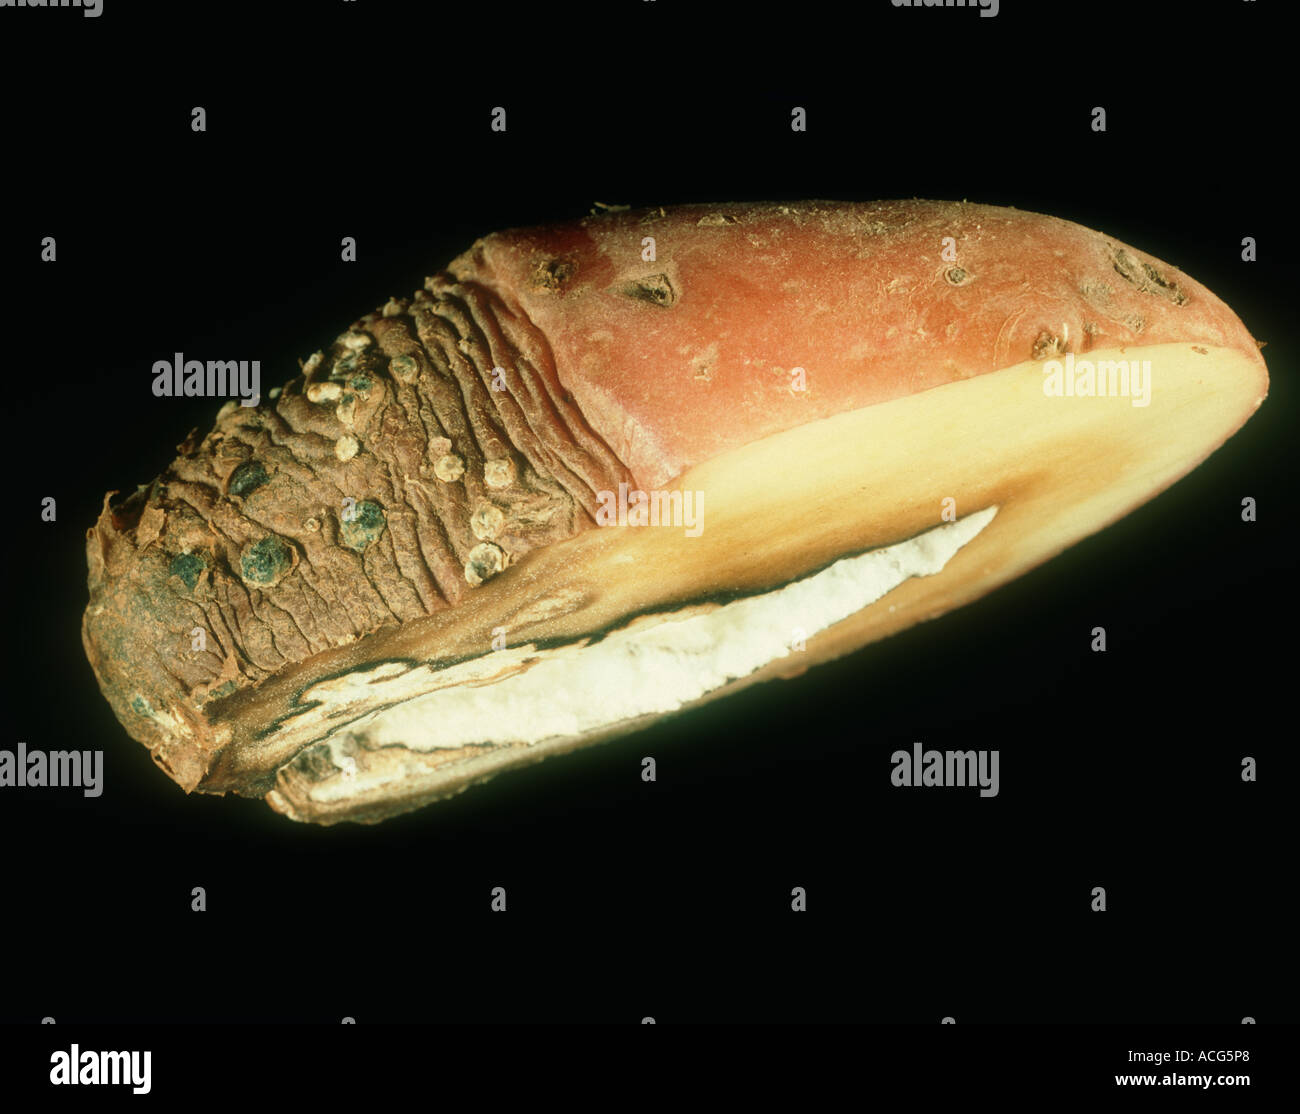 Dry rot Fusarium solani external and internal symptoms in a potato tuber Stock Photo